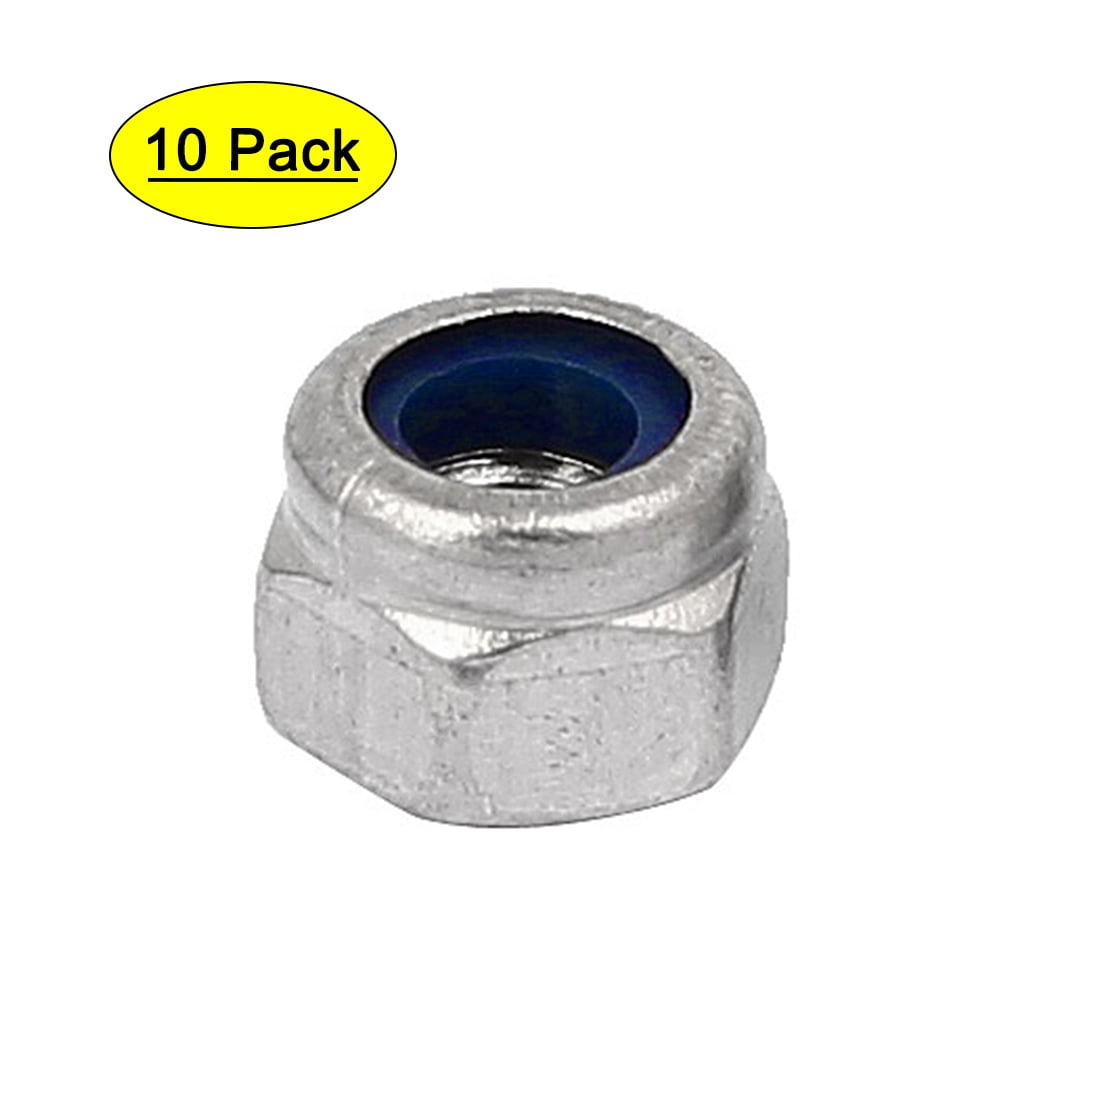 Details about   150 pcs Hex Nylon Insert Lock Nut Assortment SAE 6 Sizes High Vibration Locknut 